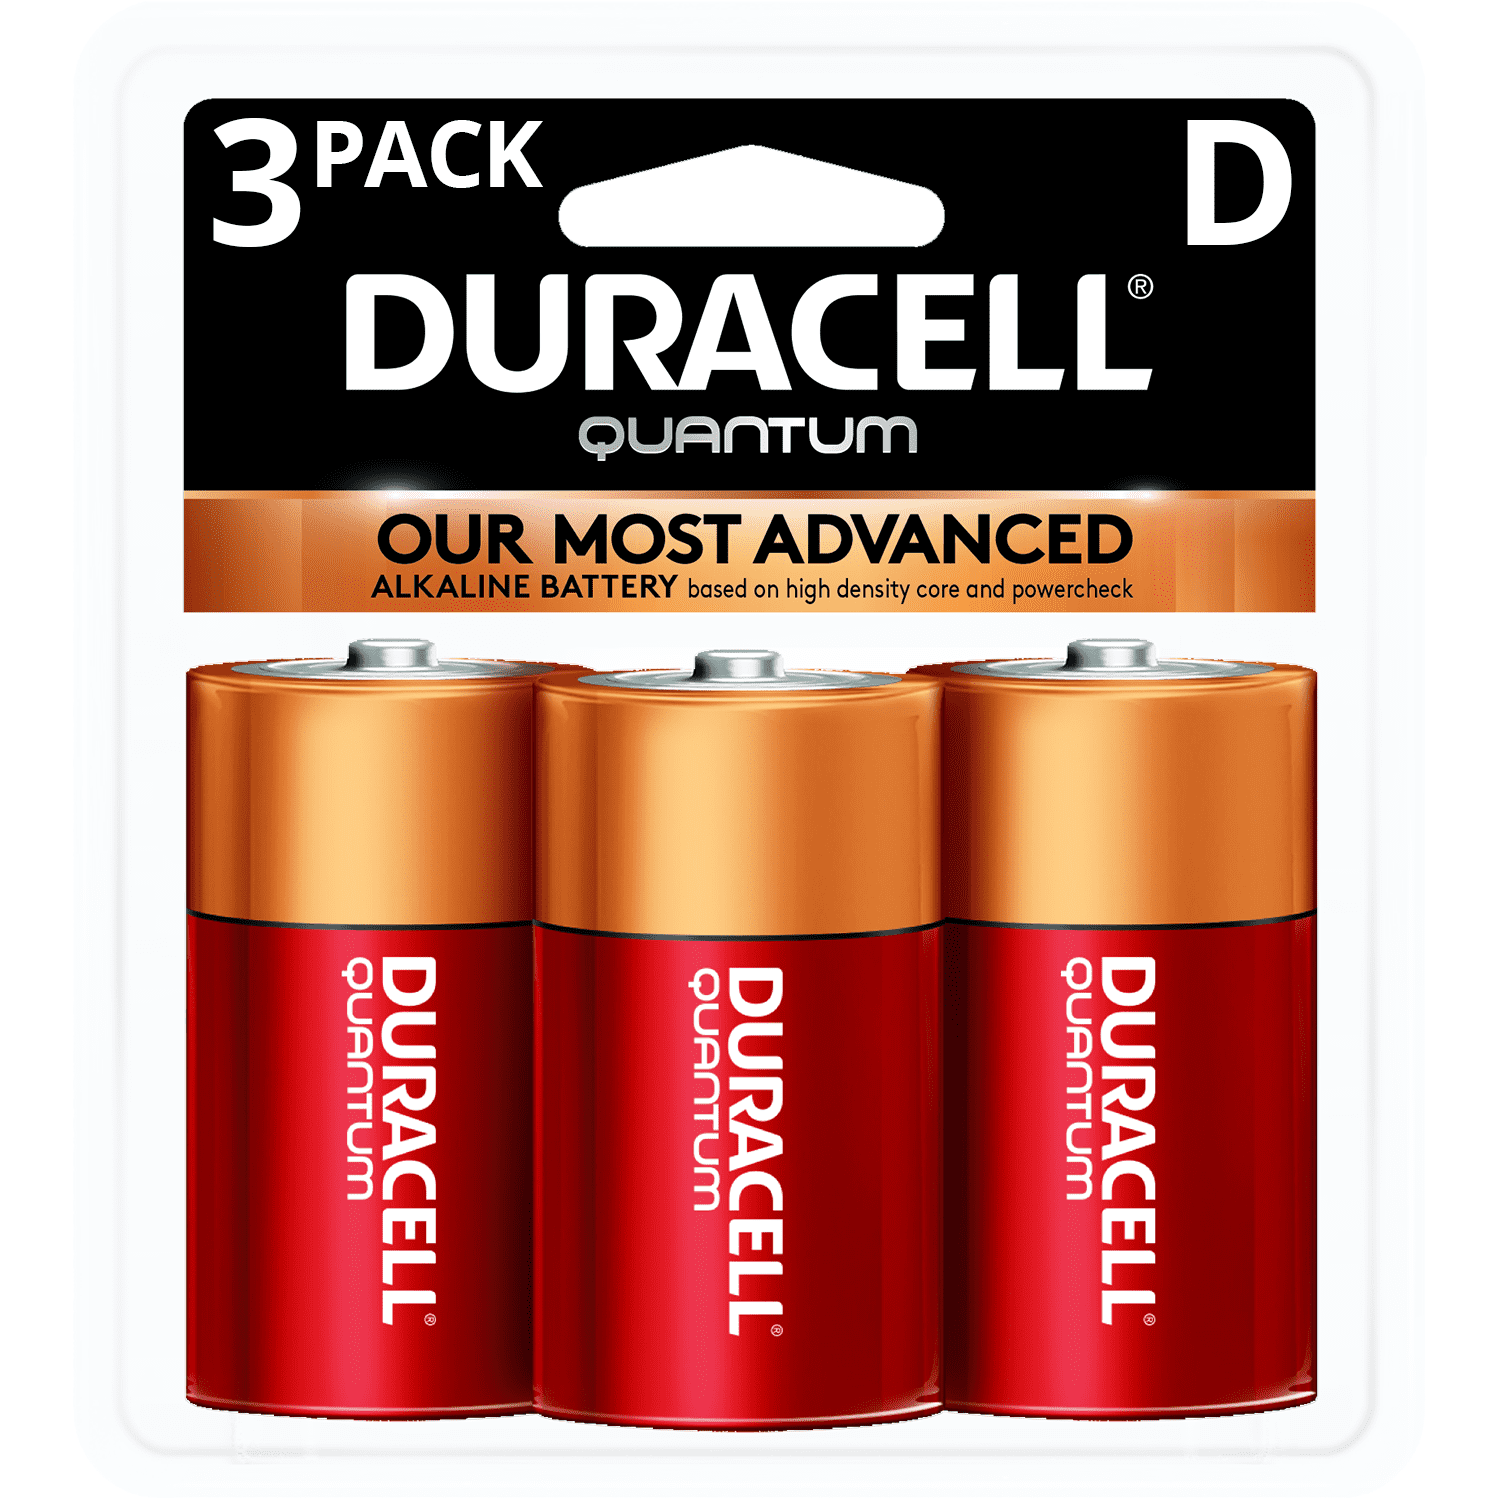 Duracell 1.5V Quantum Alkaline D Batteries with PowerCheck, 3 Pack .